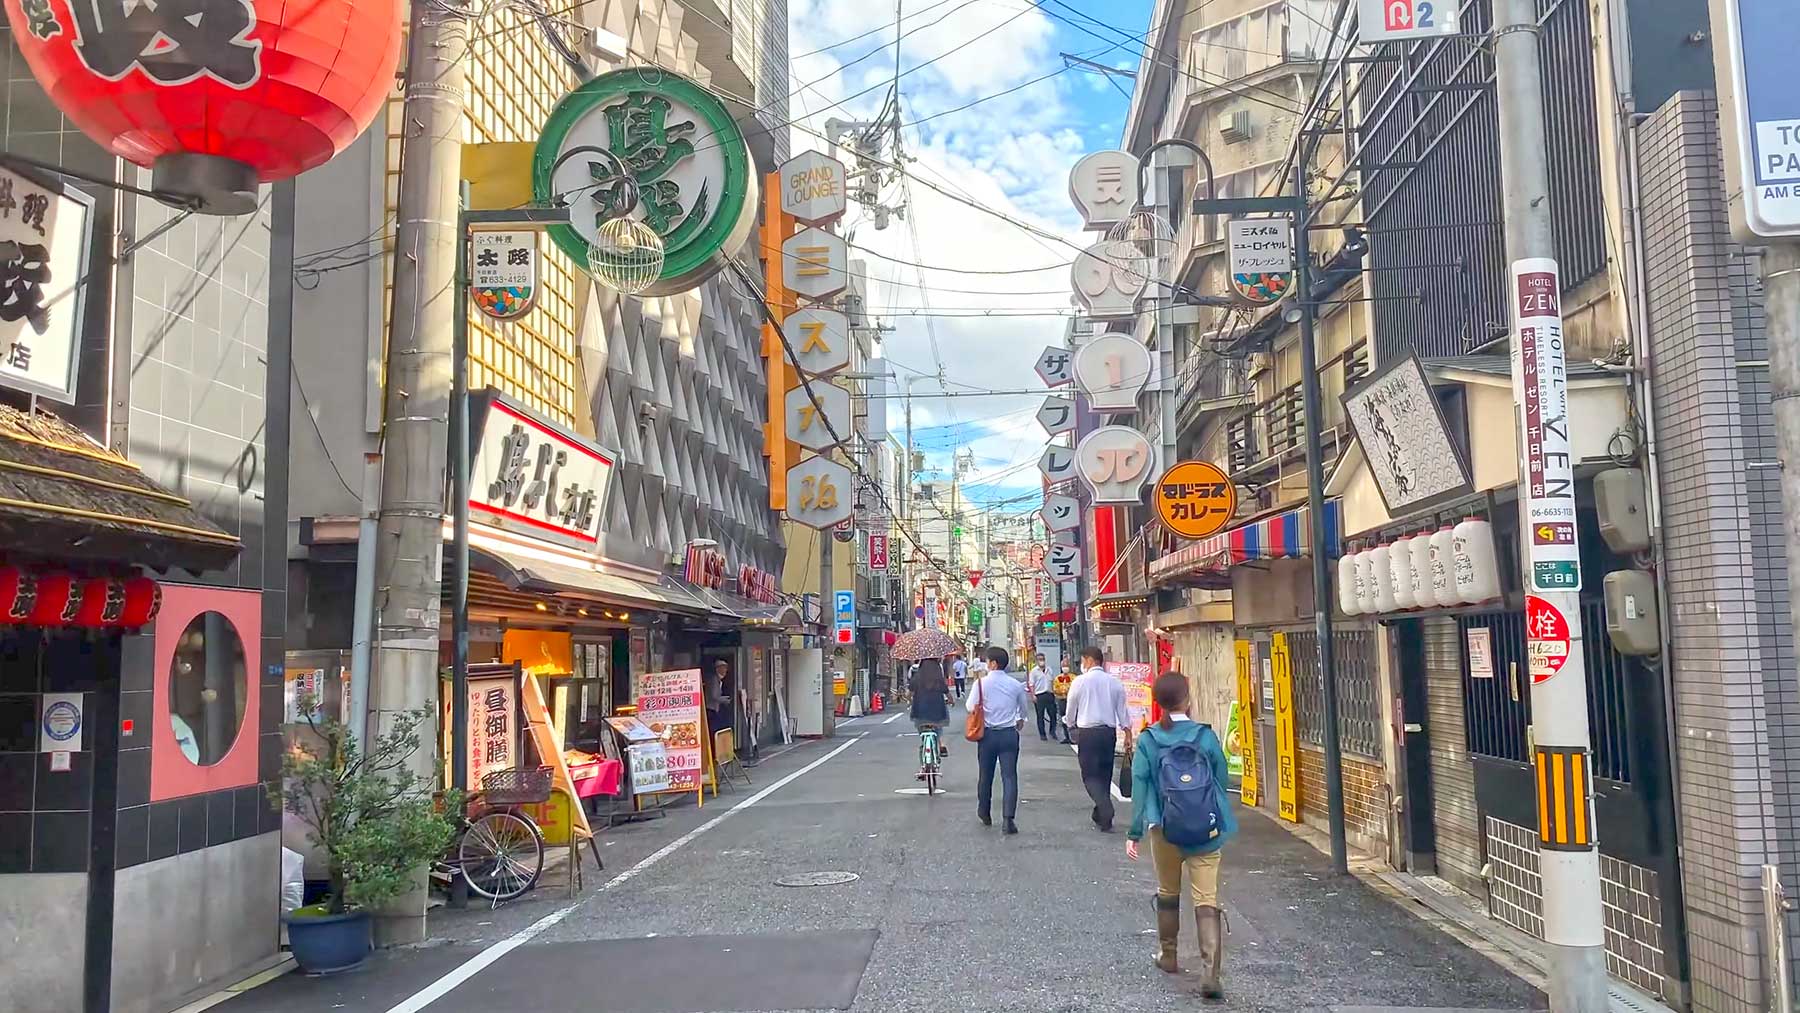 30-minütiger Video-Spaziergang durch Osaka 30-minuten-videosparziergang-durch-japan-osaka 